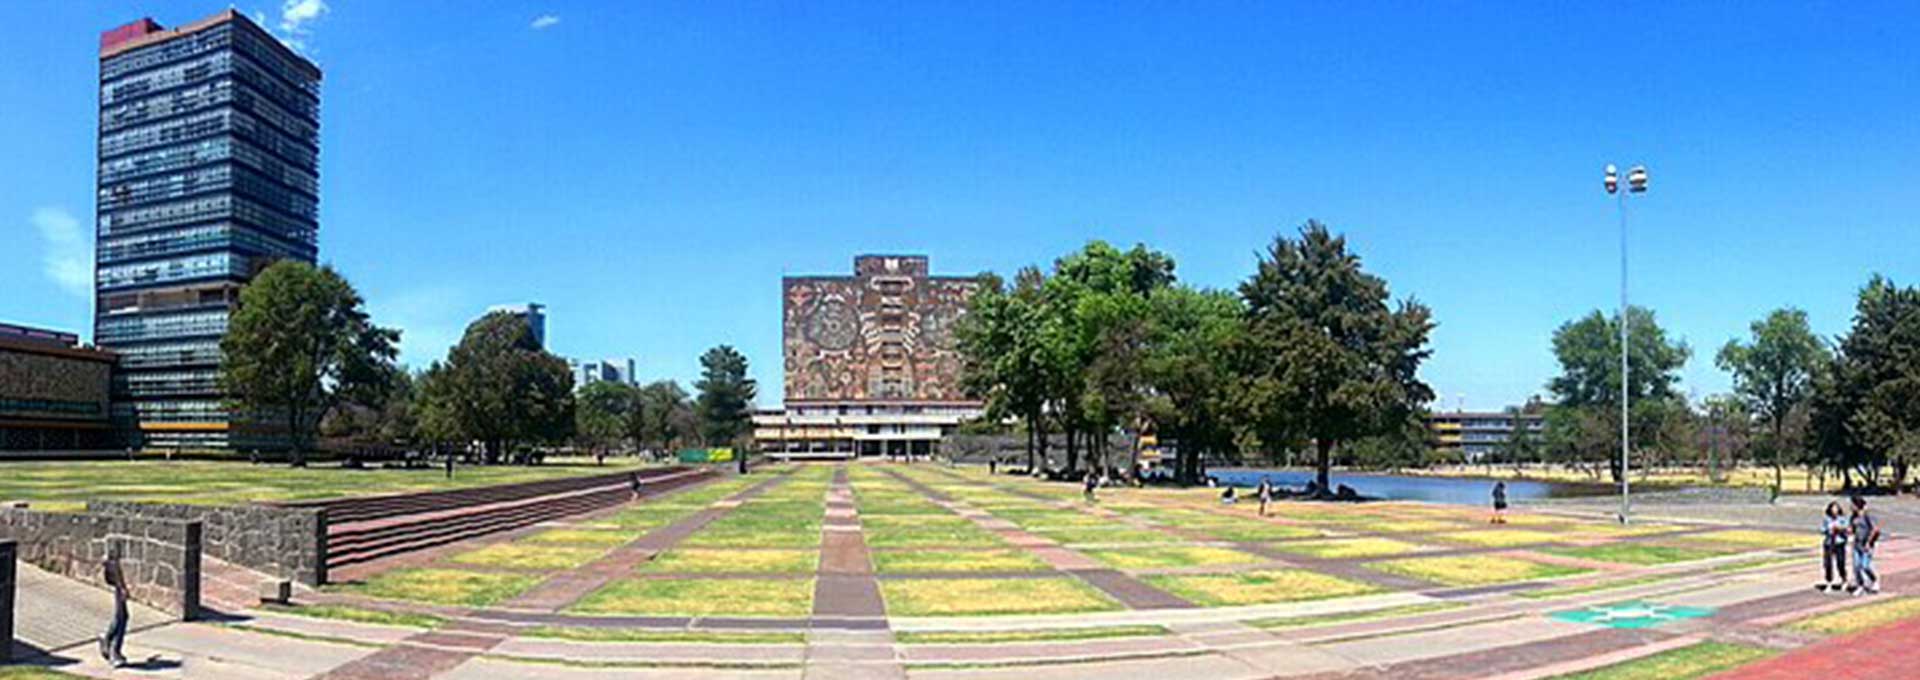 bandeau UNAM